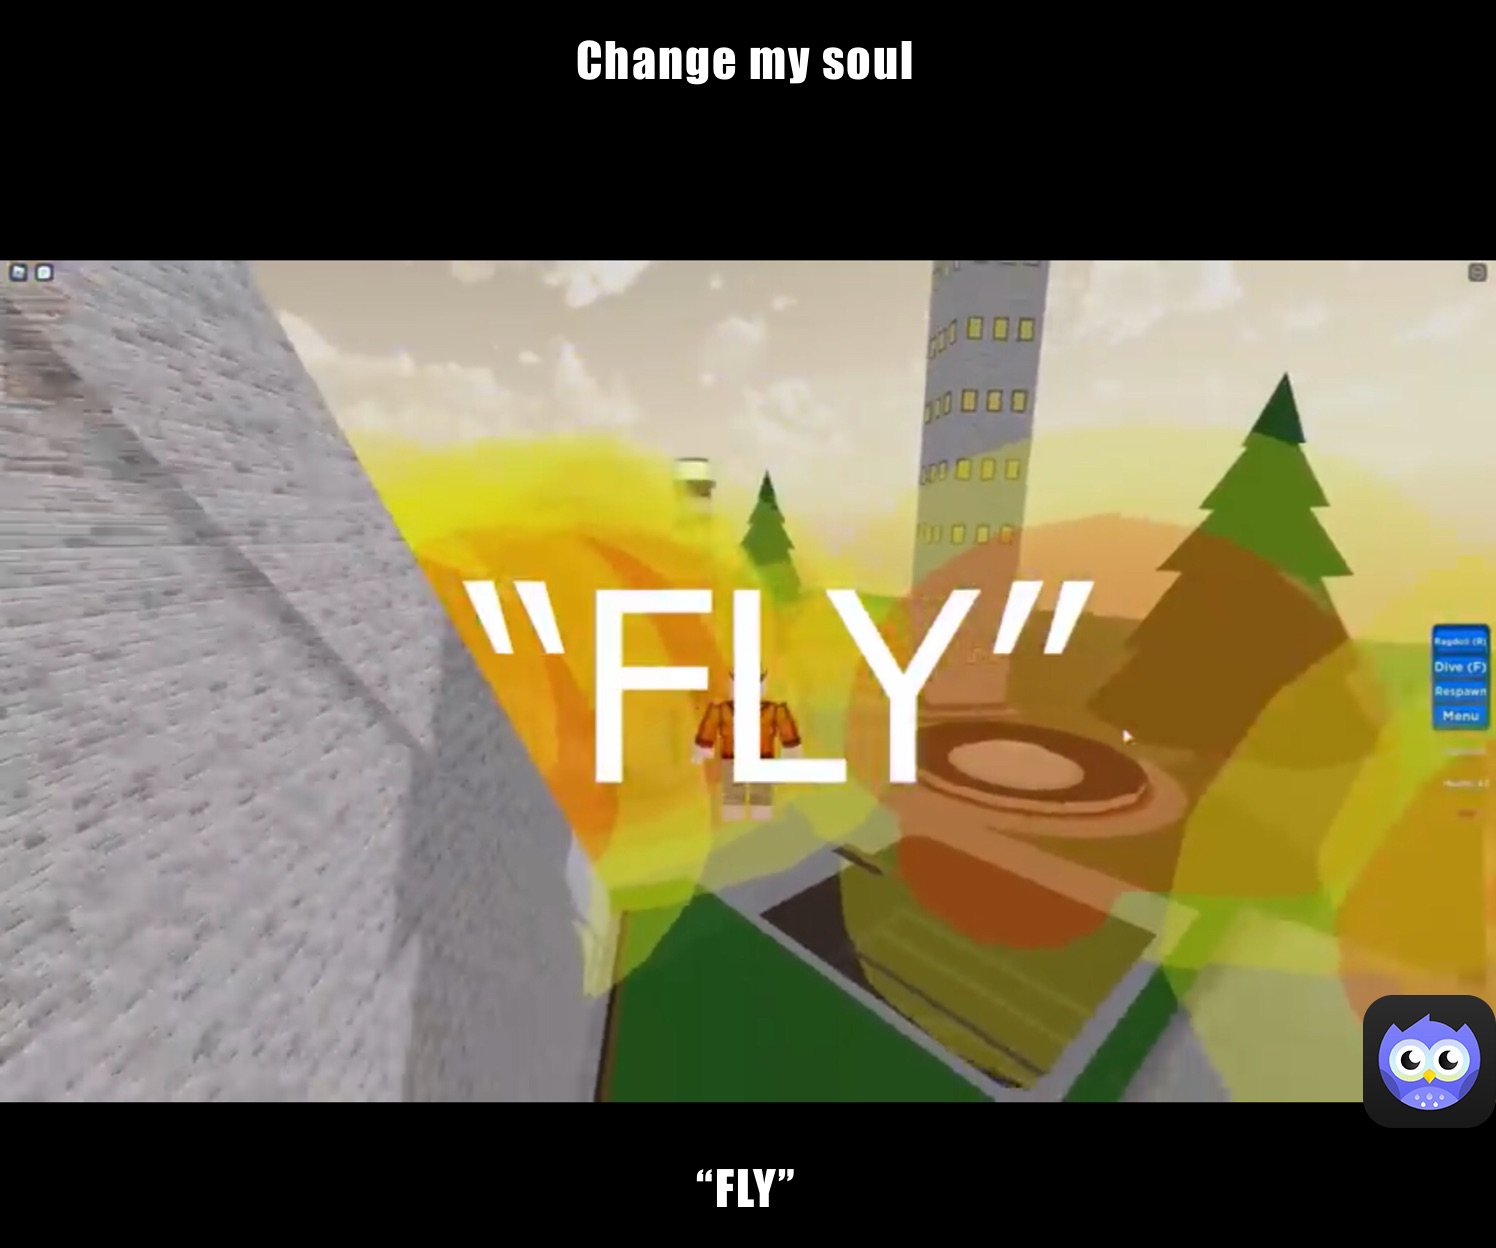 Change my soul￼￼ “FLY”￼